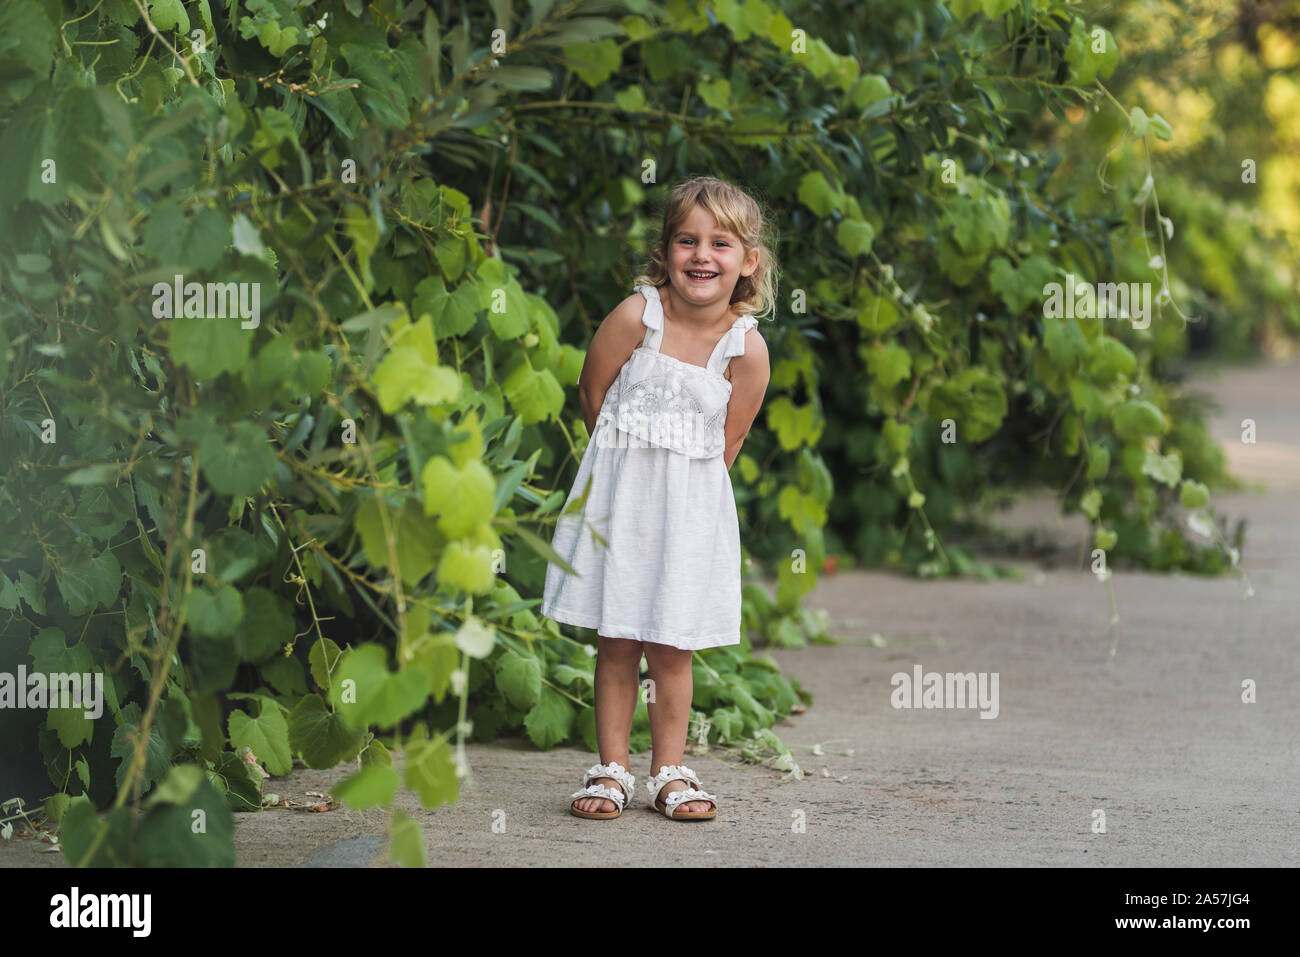 Sweet smiling girl wearing sundress avec un fond d'un écrin de verdure Banque D'Images